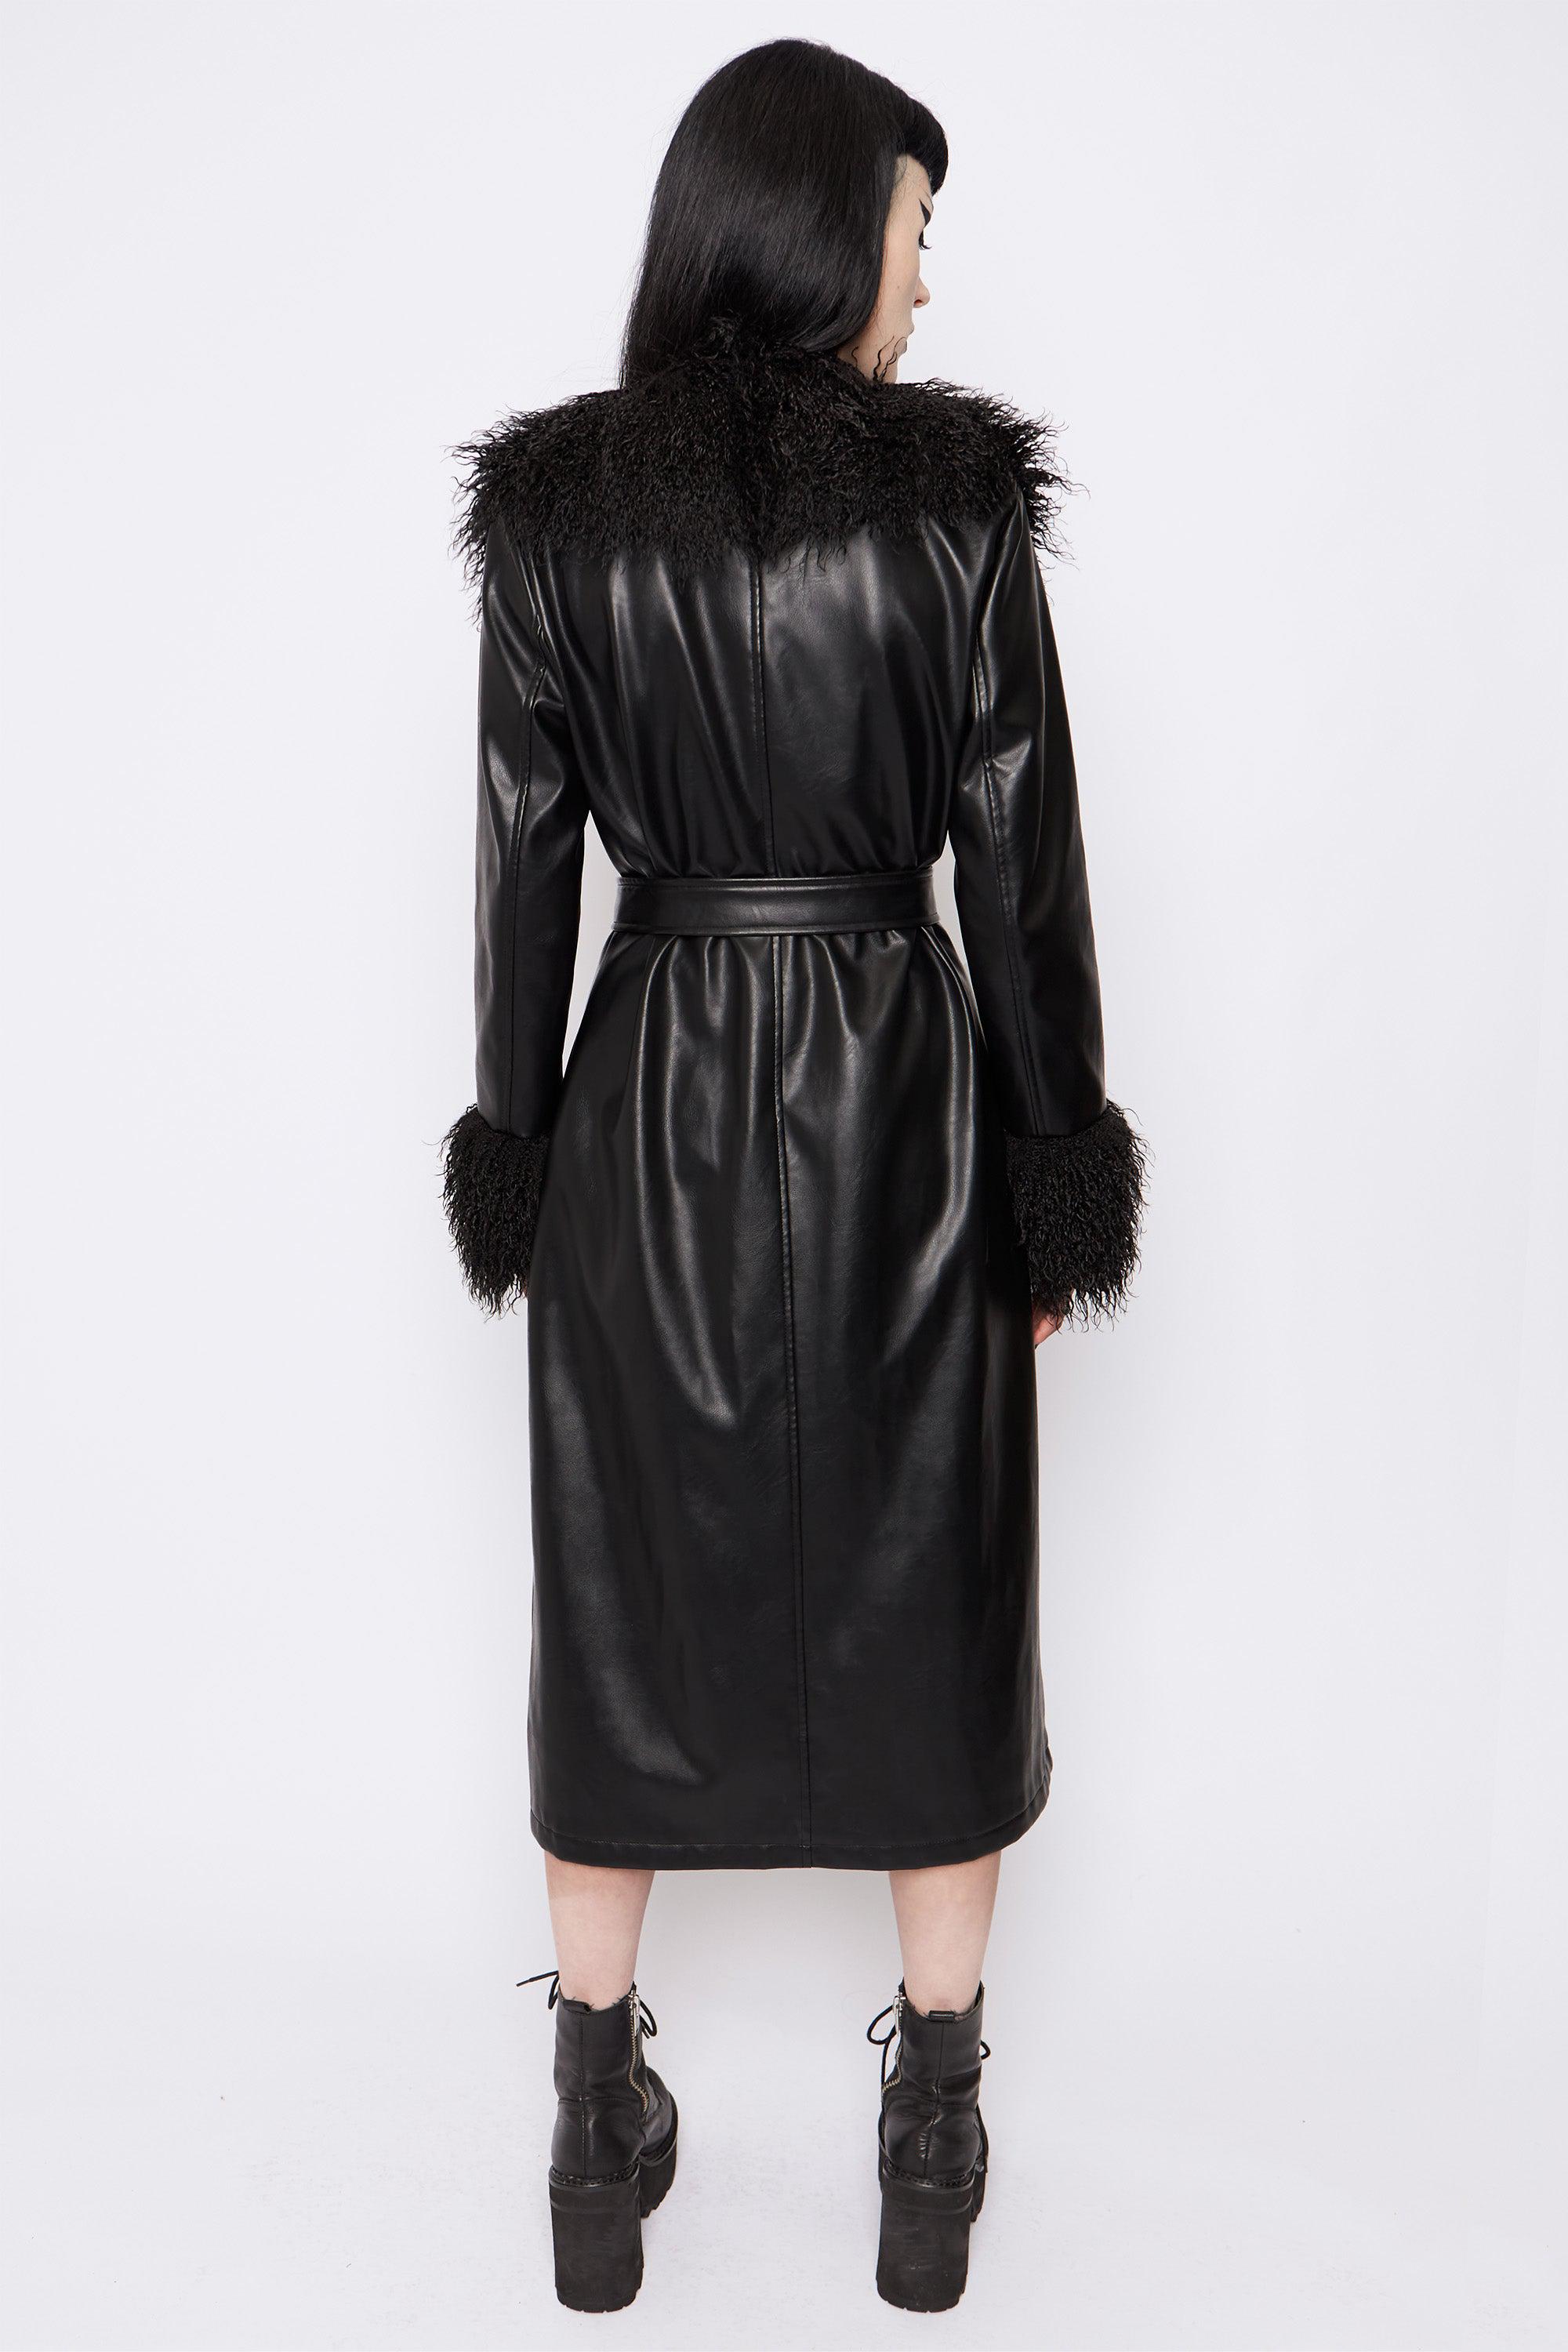 Lori Vegan Leather & Faux Fur Jacket - Mary Wyatt London